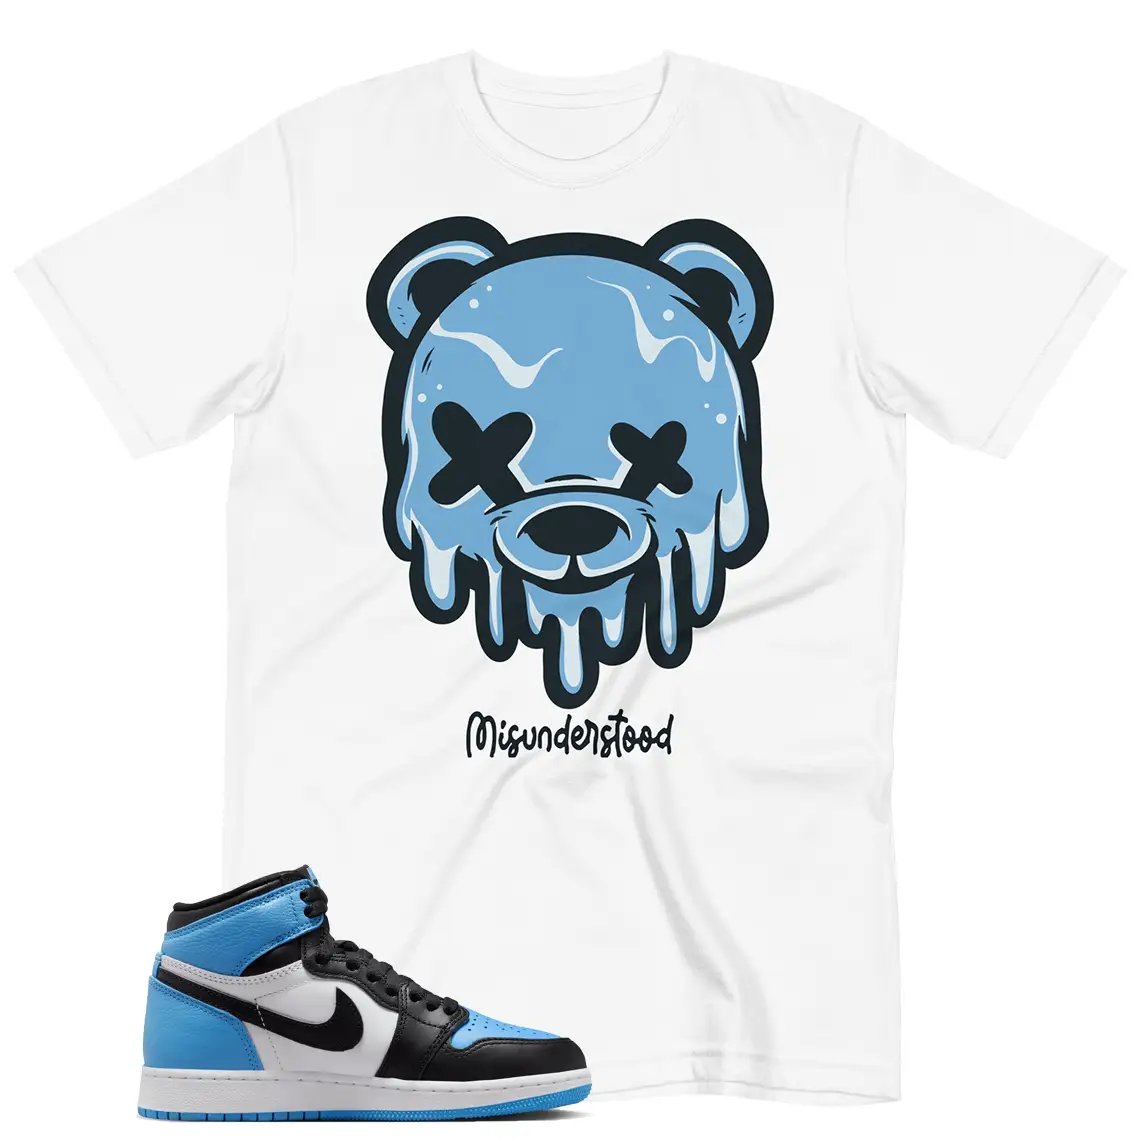 Jordan 1 OG UNC Toe Shirt - Drippy Bear Graphic